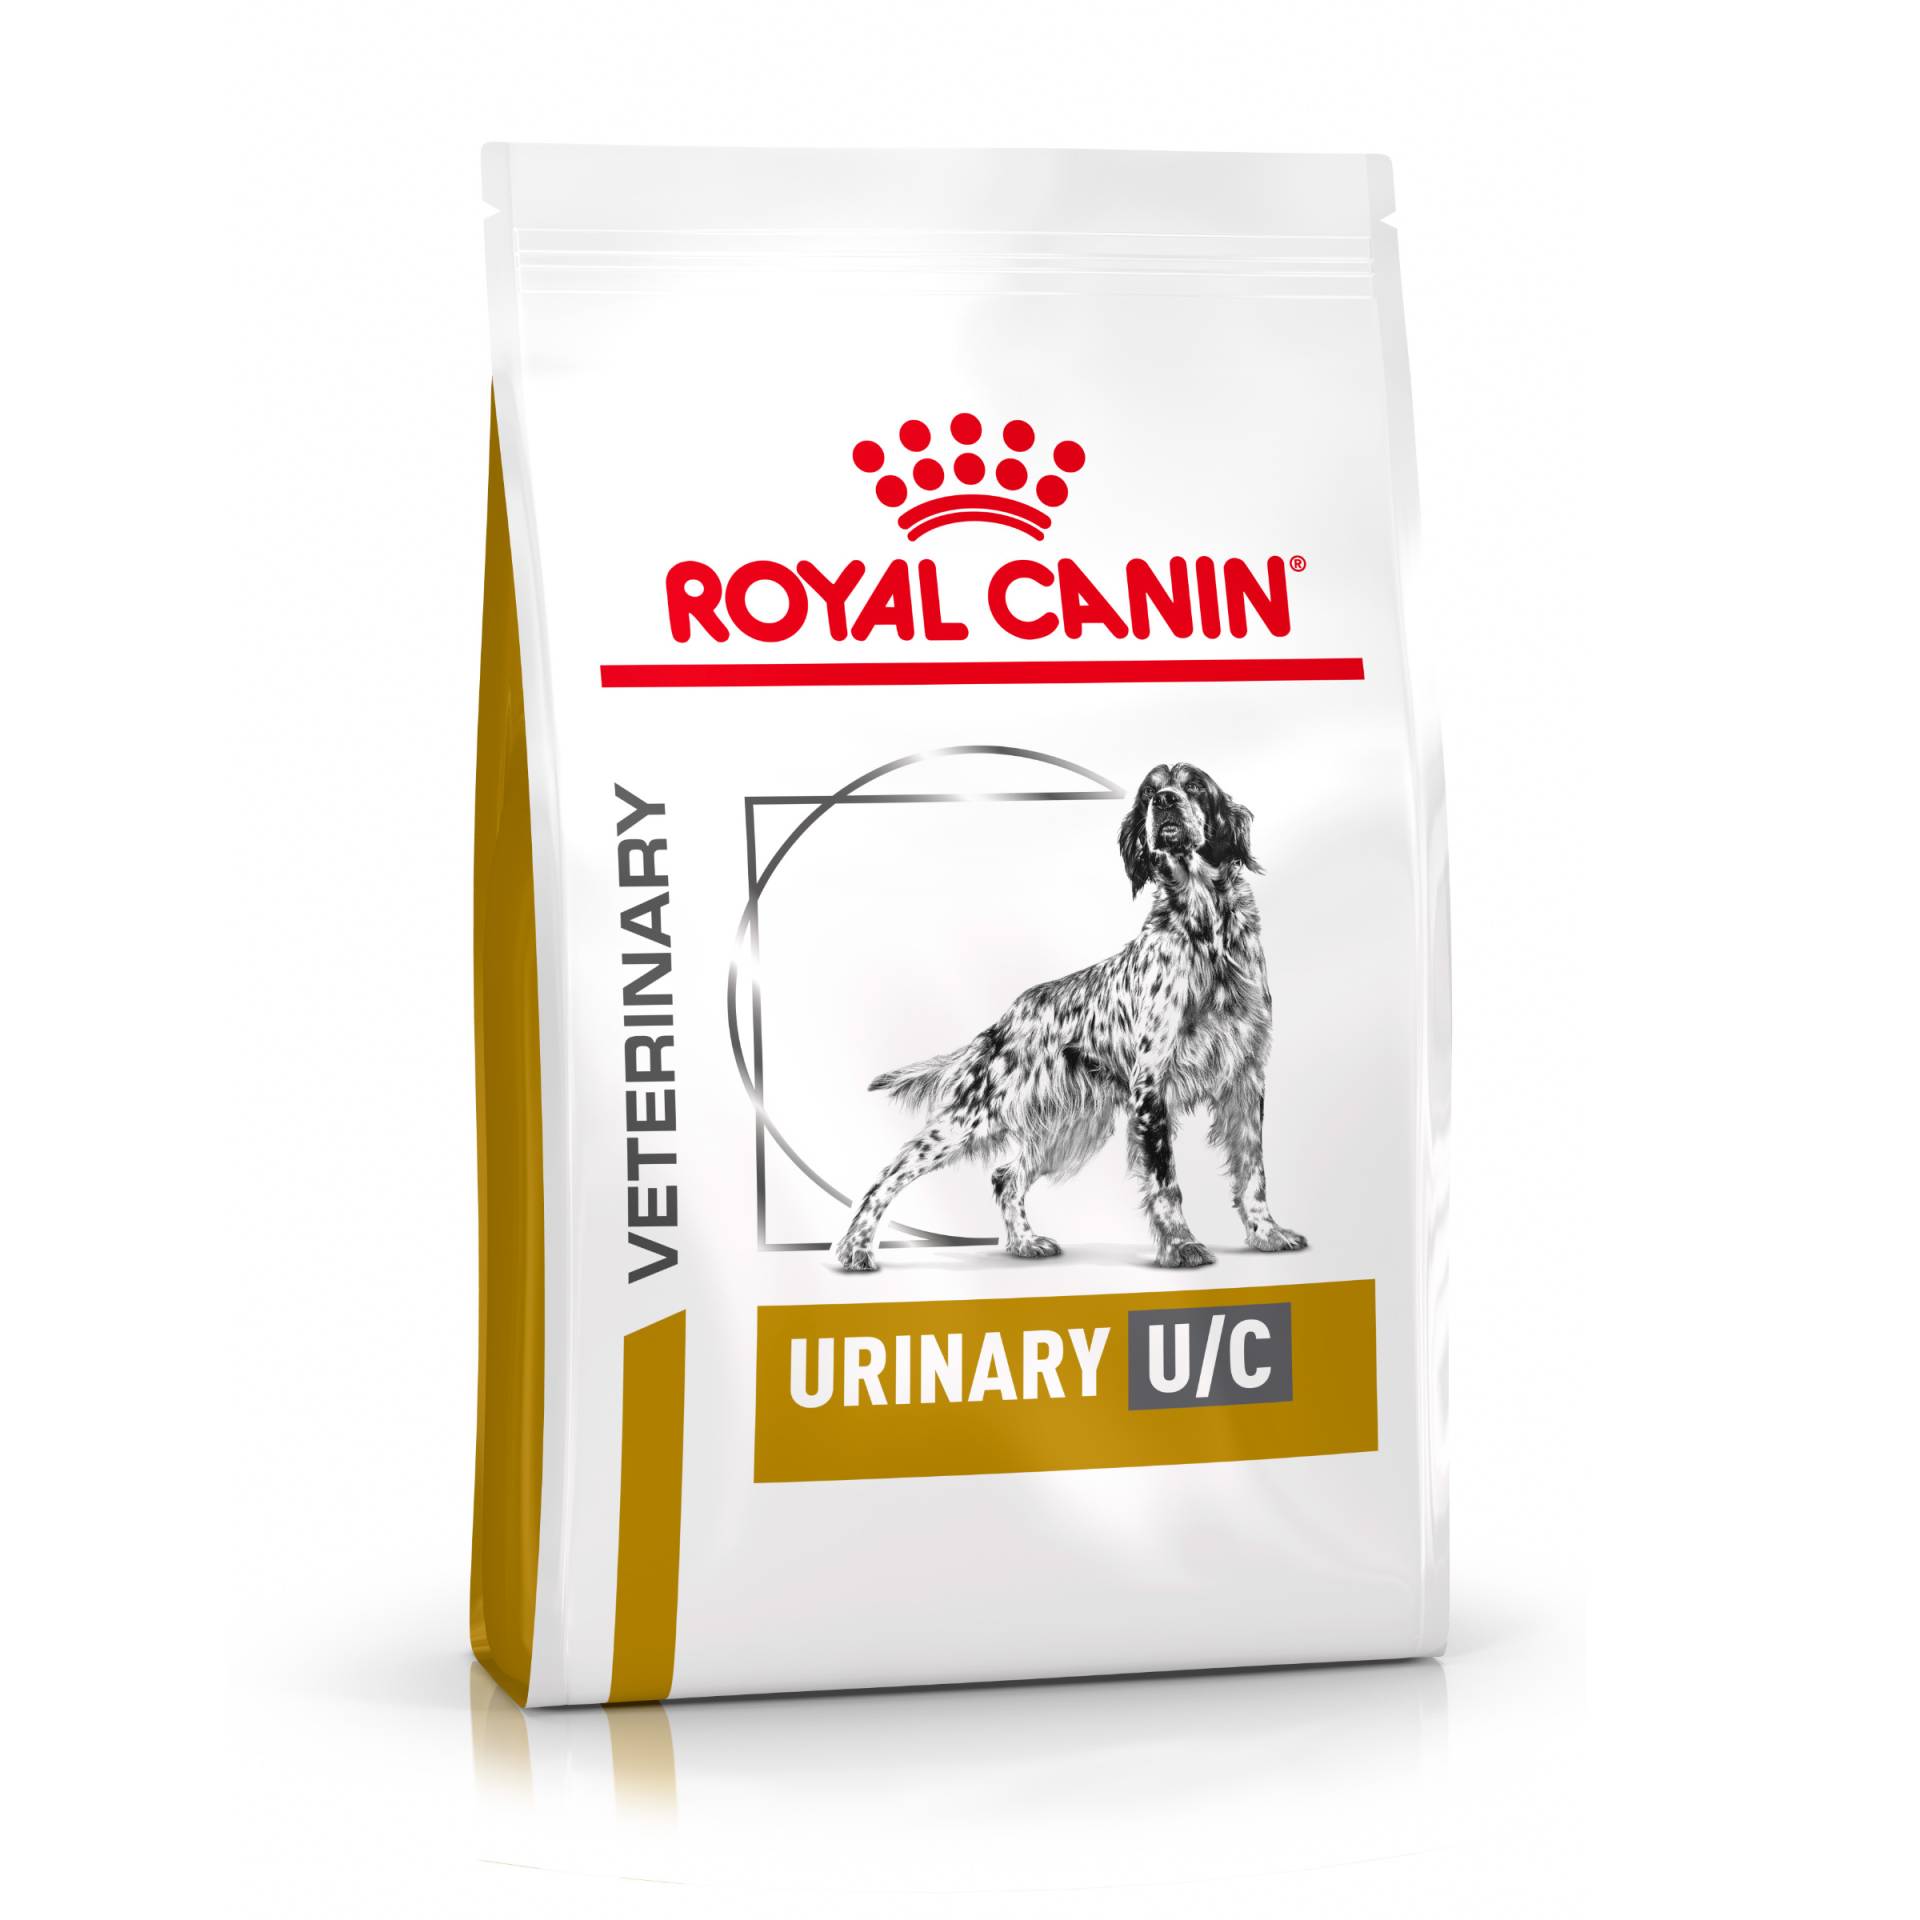 Royal Canin Veterinary Canine Urinary U/C low purine - Sparpaket: 2 x 14 kg von Royal Canin Veterinary Diet